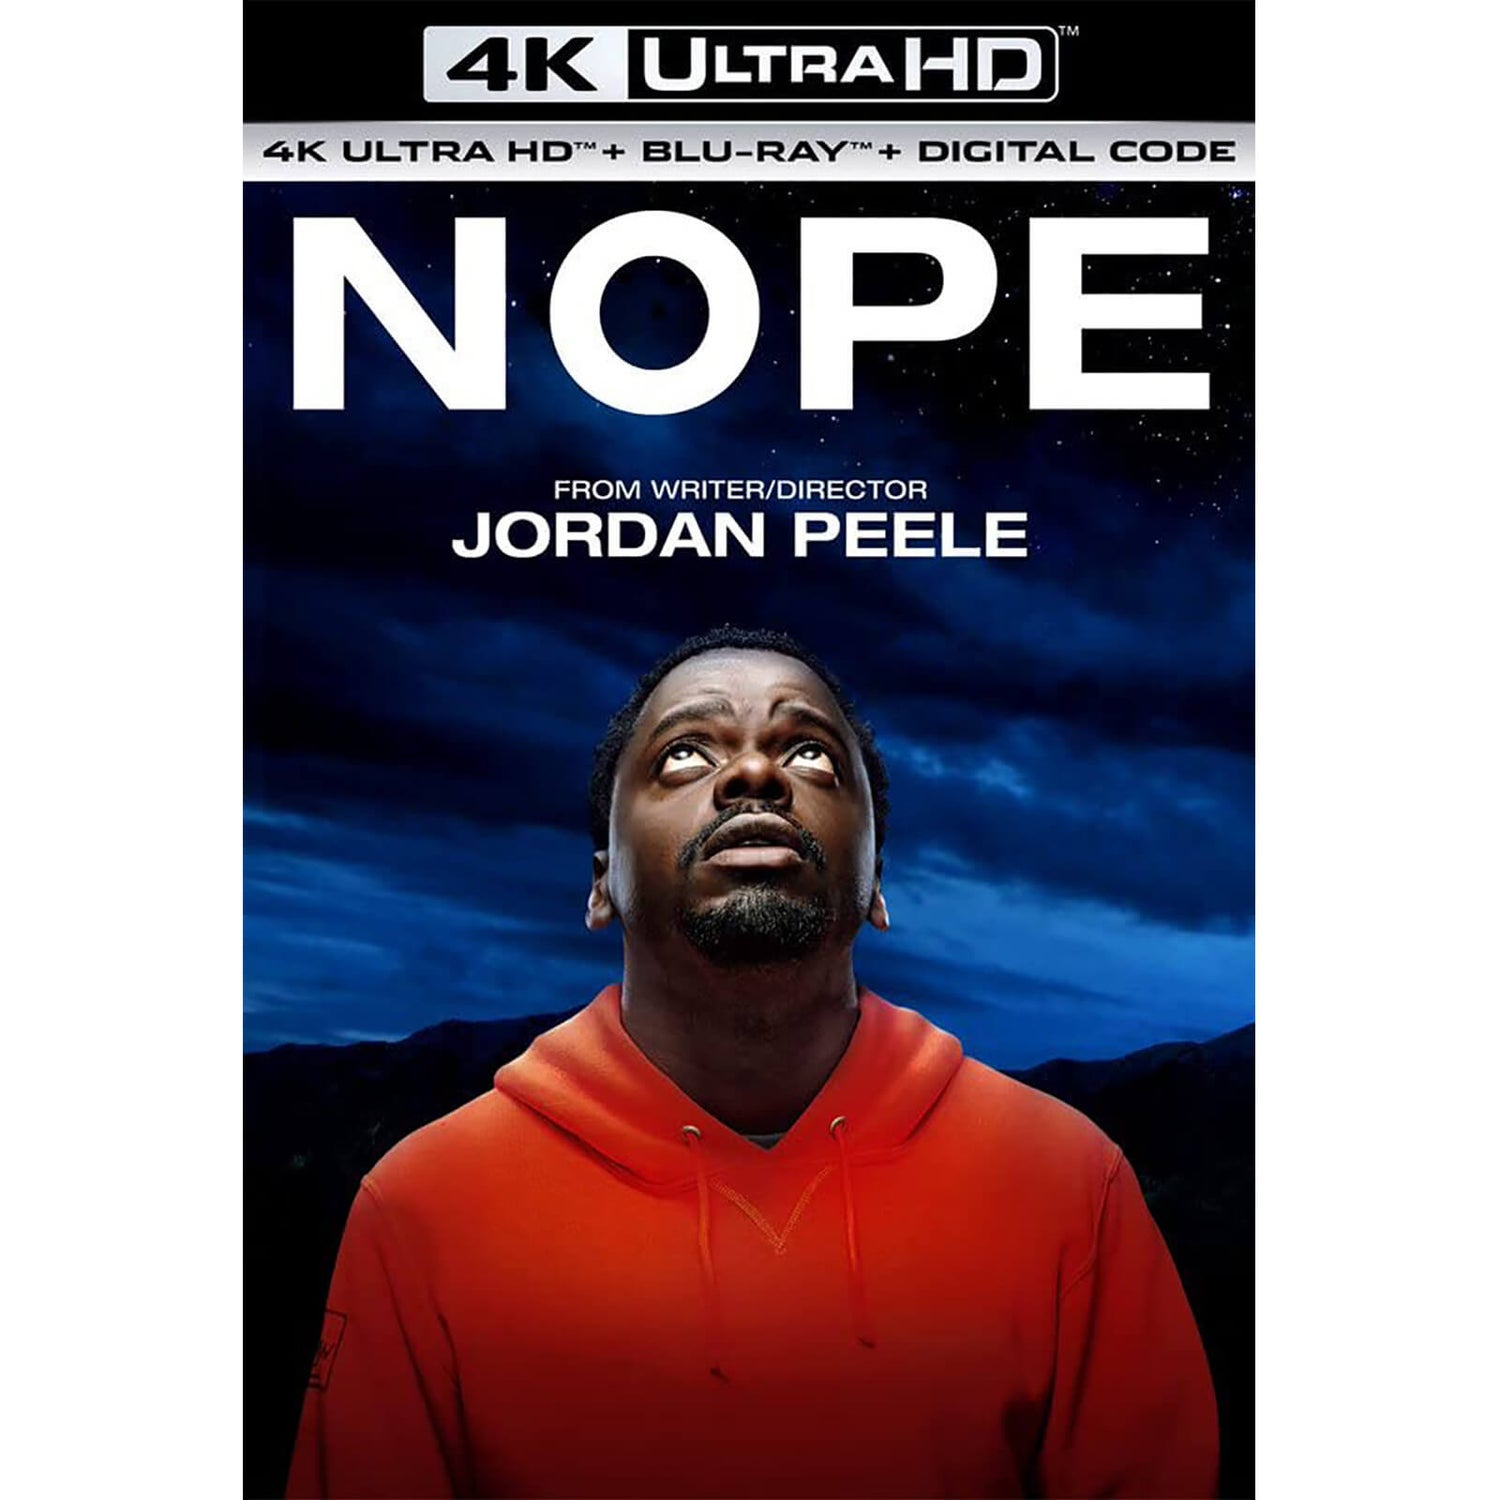 Nope 4K Ultra HD (Includes Blu-ray + Digital)